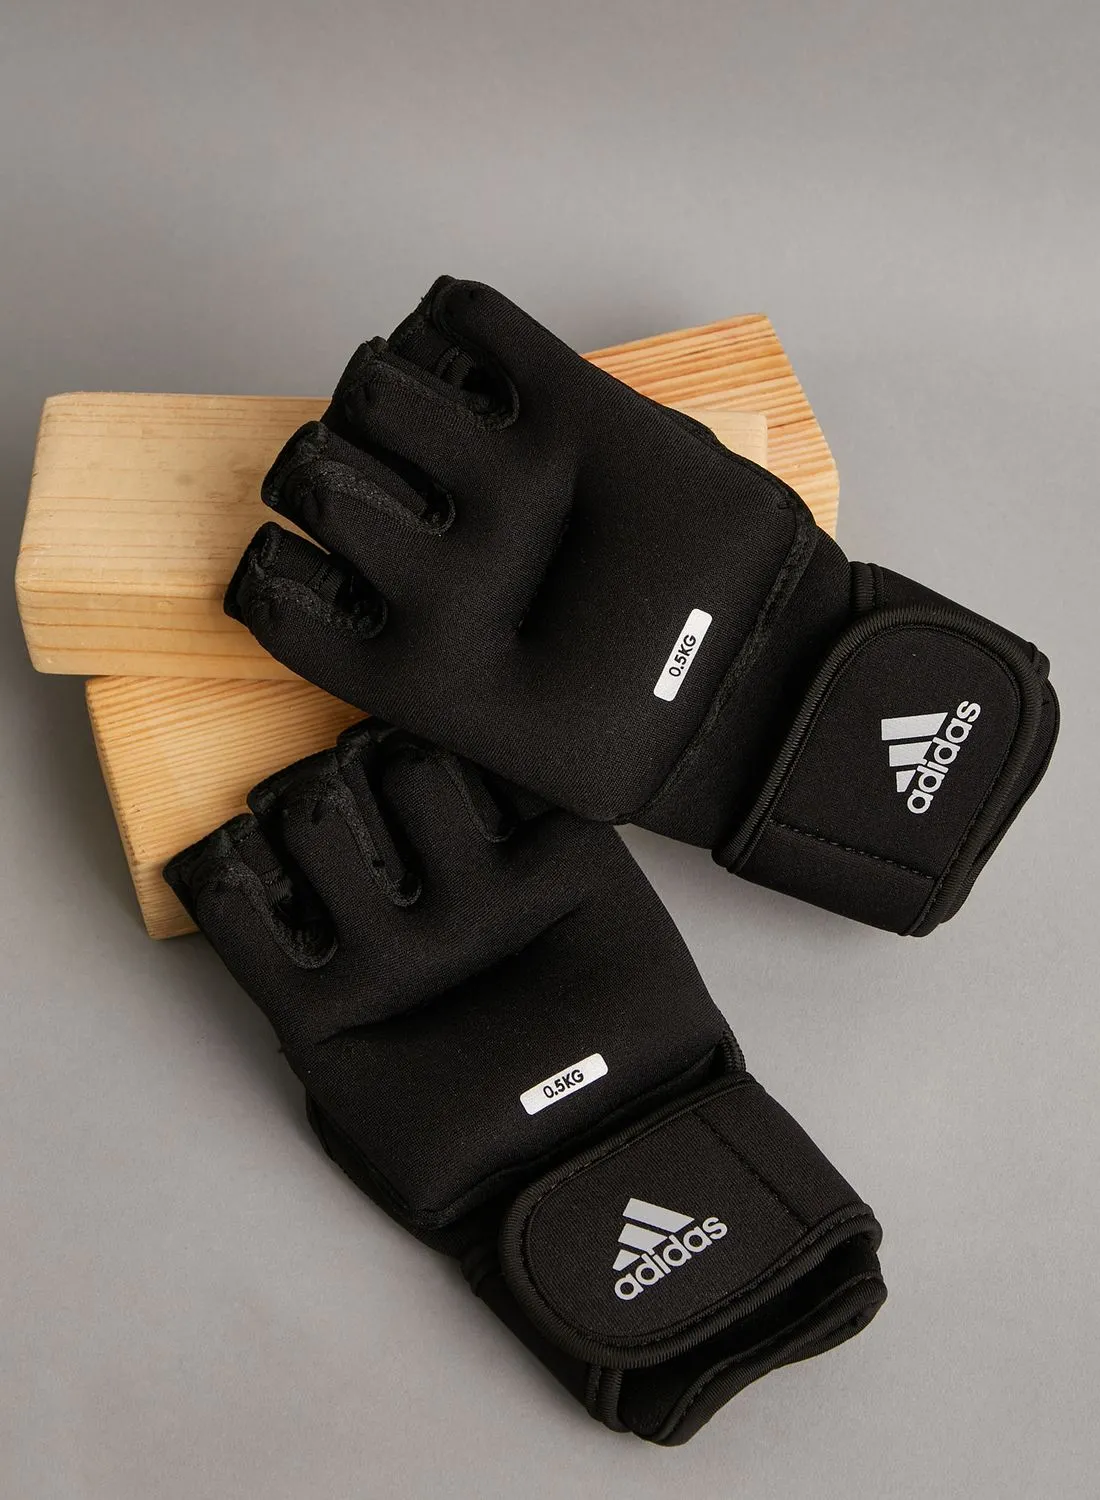 Adidas Weighted Gloves - 0.5Kg